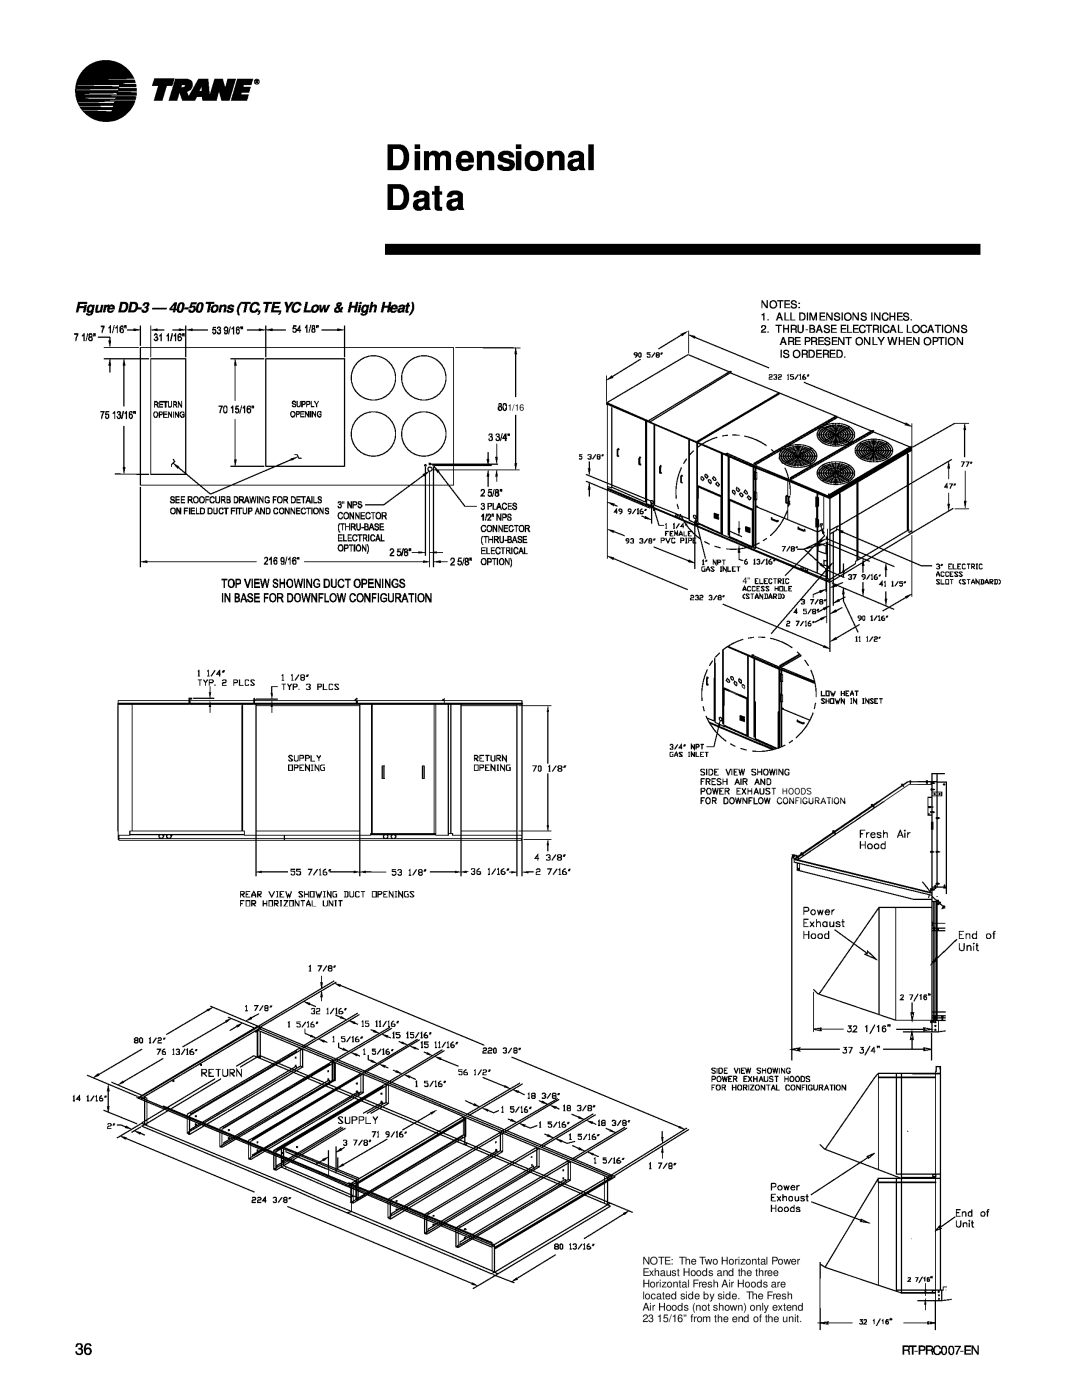 Trane RT-PRC007-EN manual Dimensional Data, Figure DD-3- 40-50TonsTC,TE,YC Low & High Heat, 1/16 